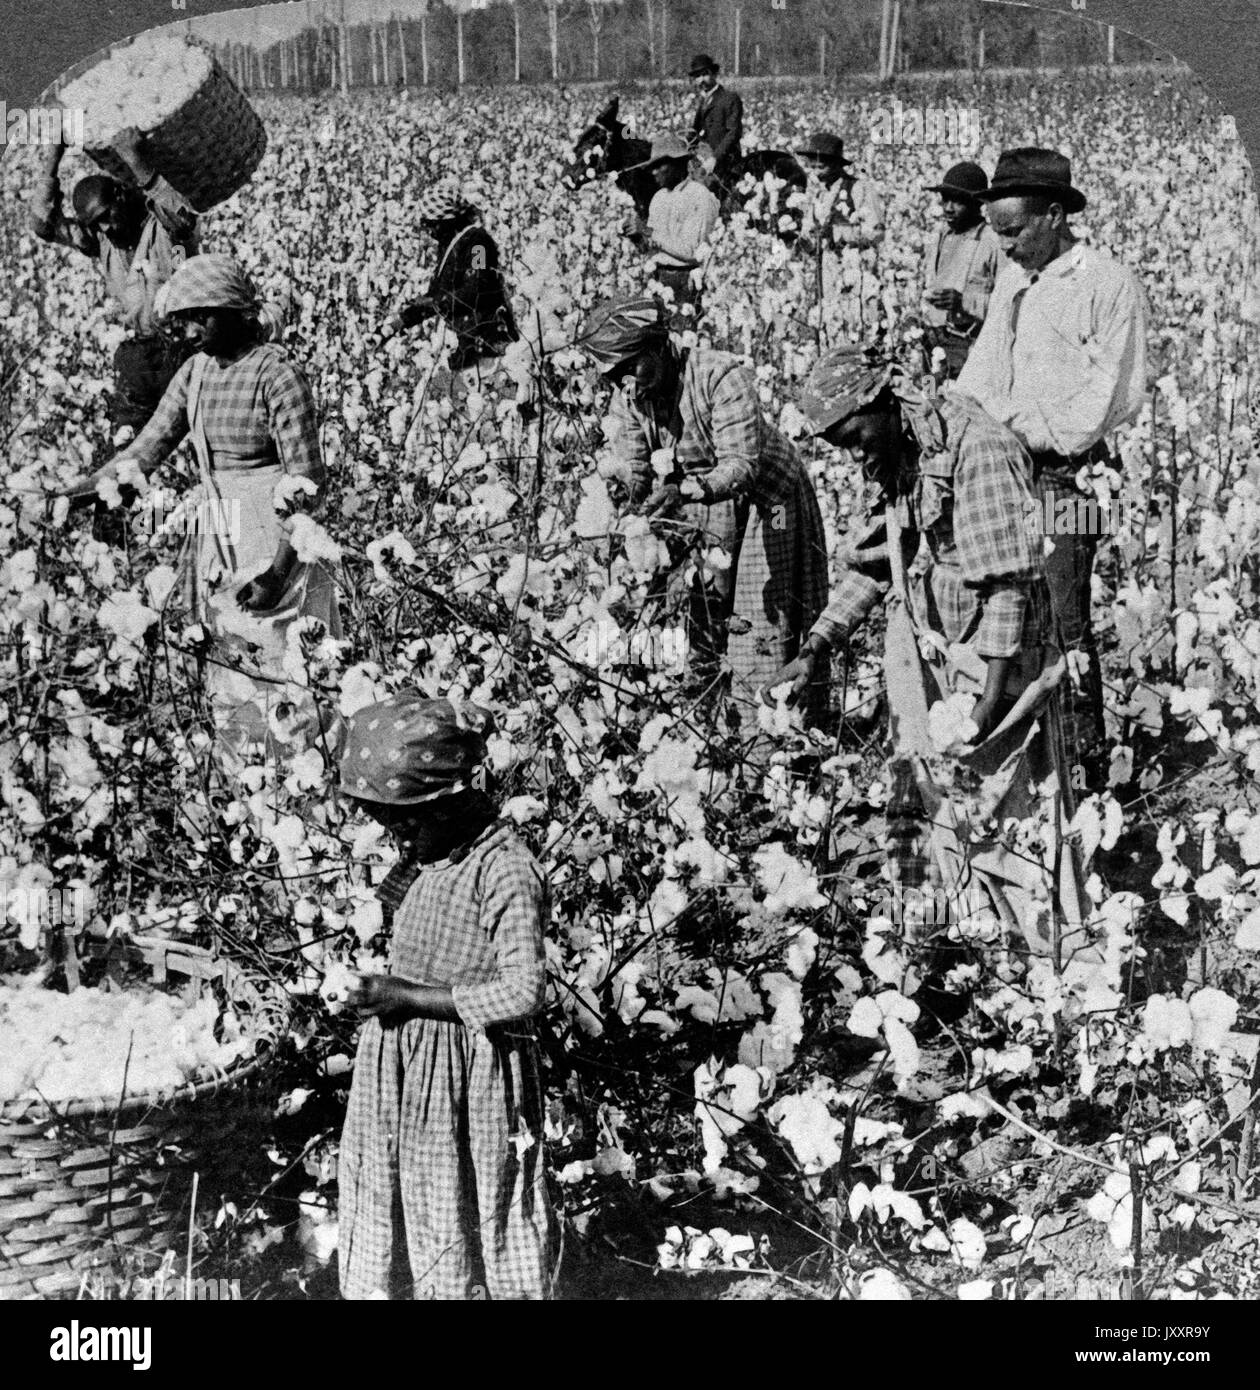 Baumwolle ist König - Feldszene auf einer Plantage in Georgia, Stati Uniti d'America 1895. Il cotone è re - scena da una piantagione in Georgia, Stati Uniti d'America 1895. Foto Stock